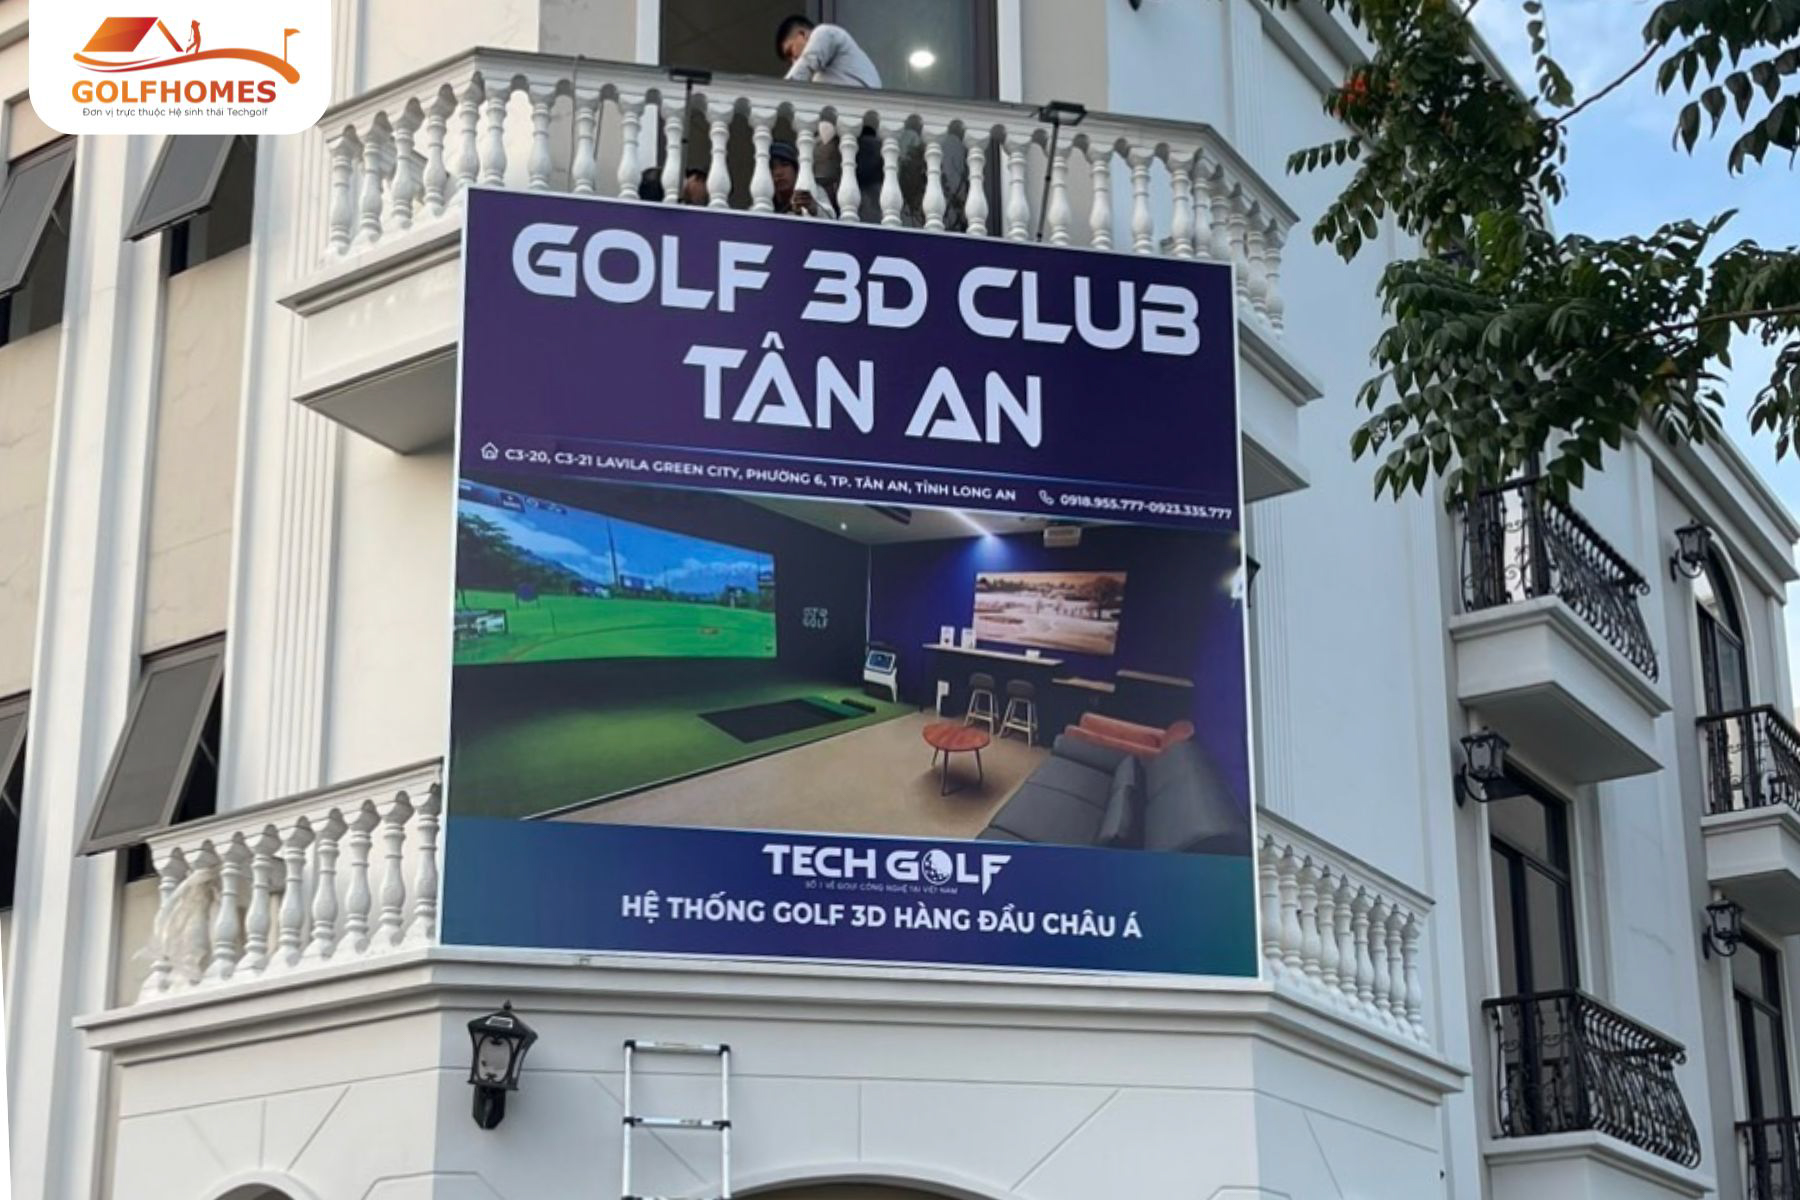 Golfhomes triển khai dự án Golf 3D Club Tân An, tỉnh Long An